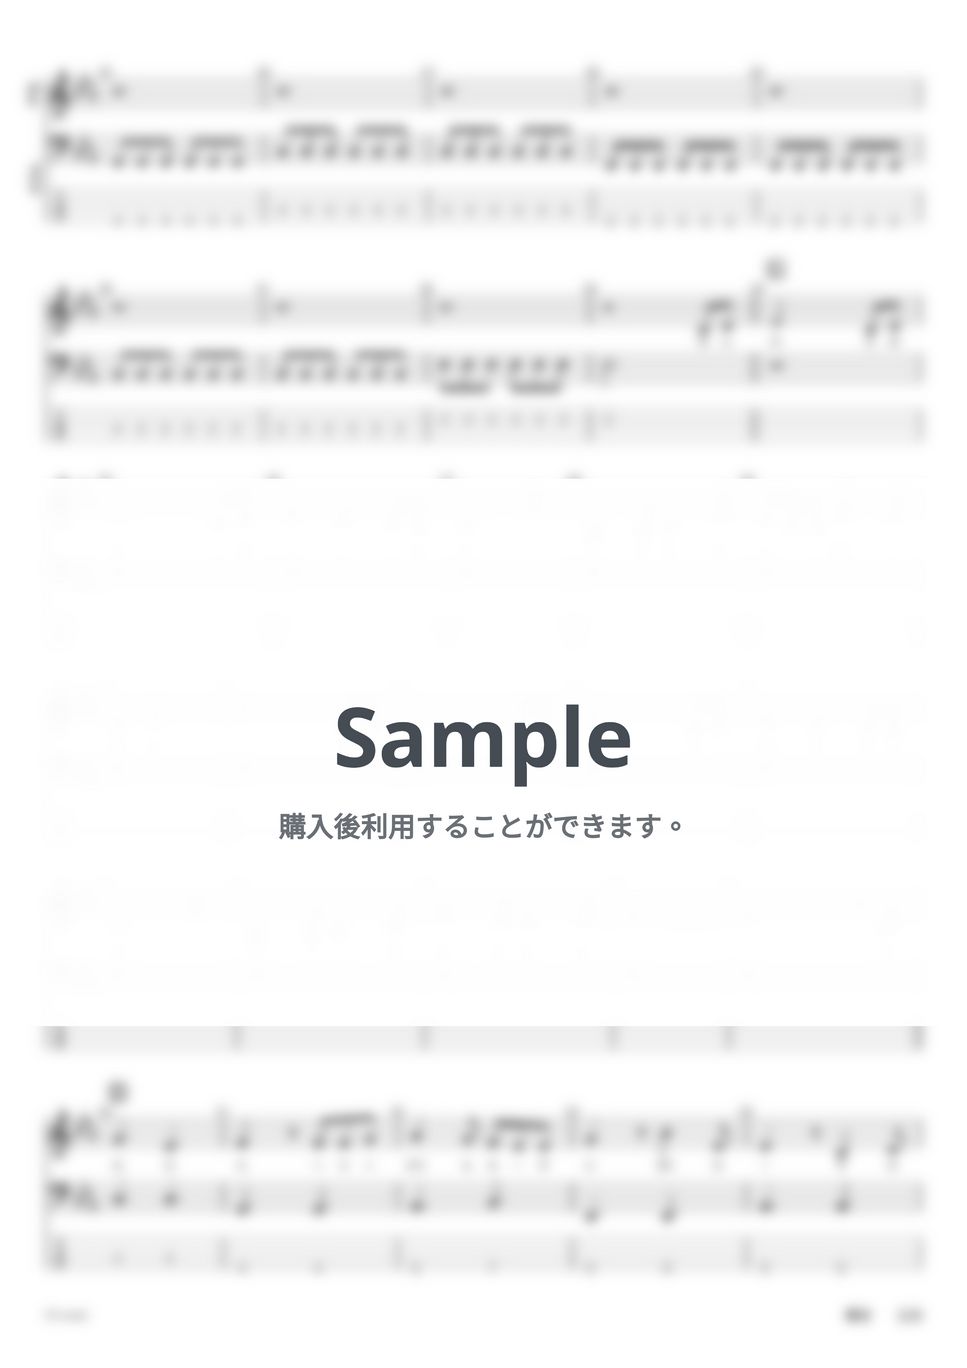 back number - 瞬き【ベースタブ譜、メロディー、歌詞】 by G's score